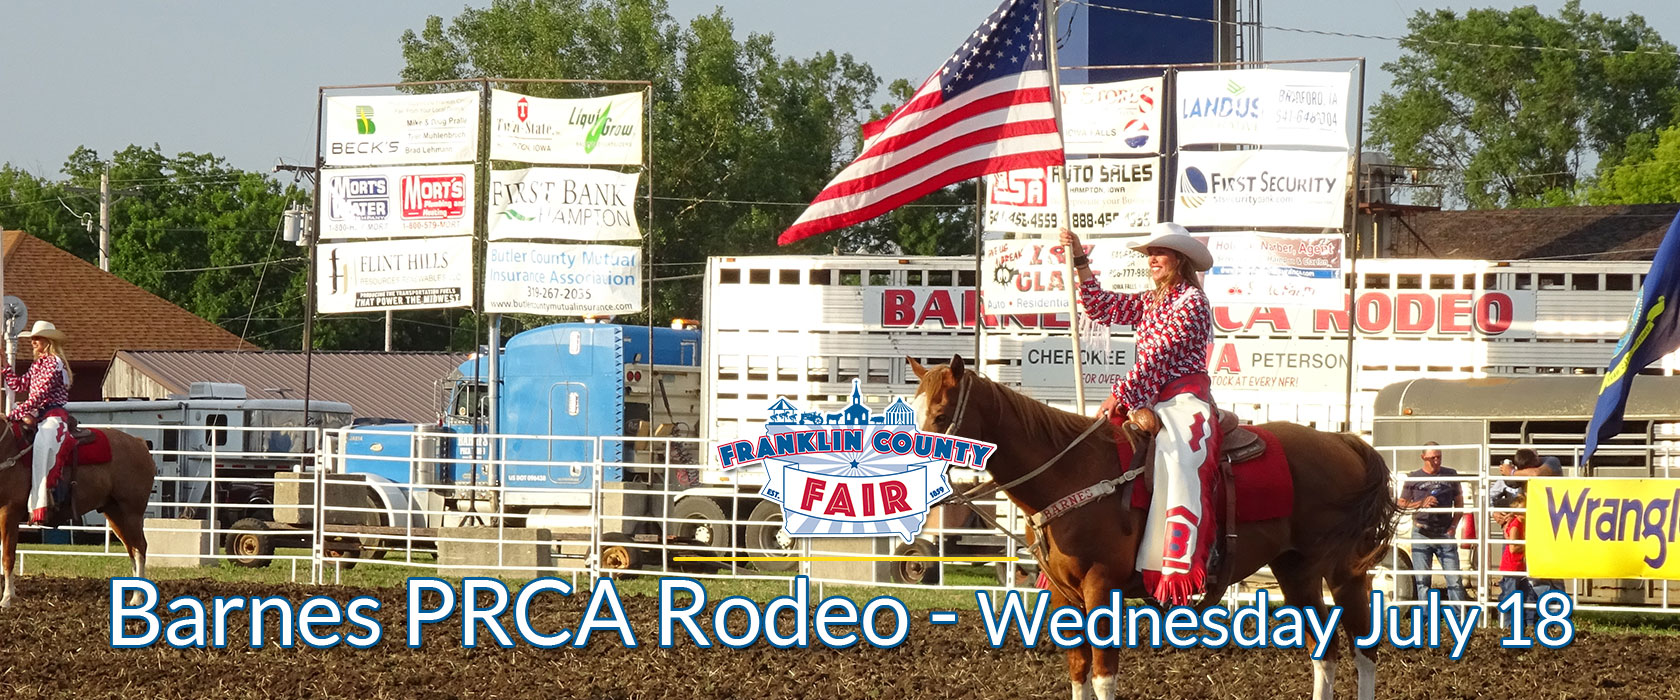 Barnes PRCA Rodeo Slide Image